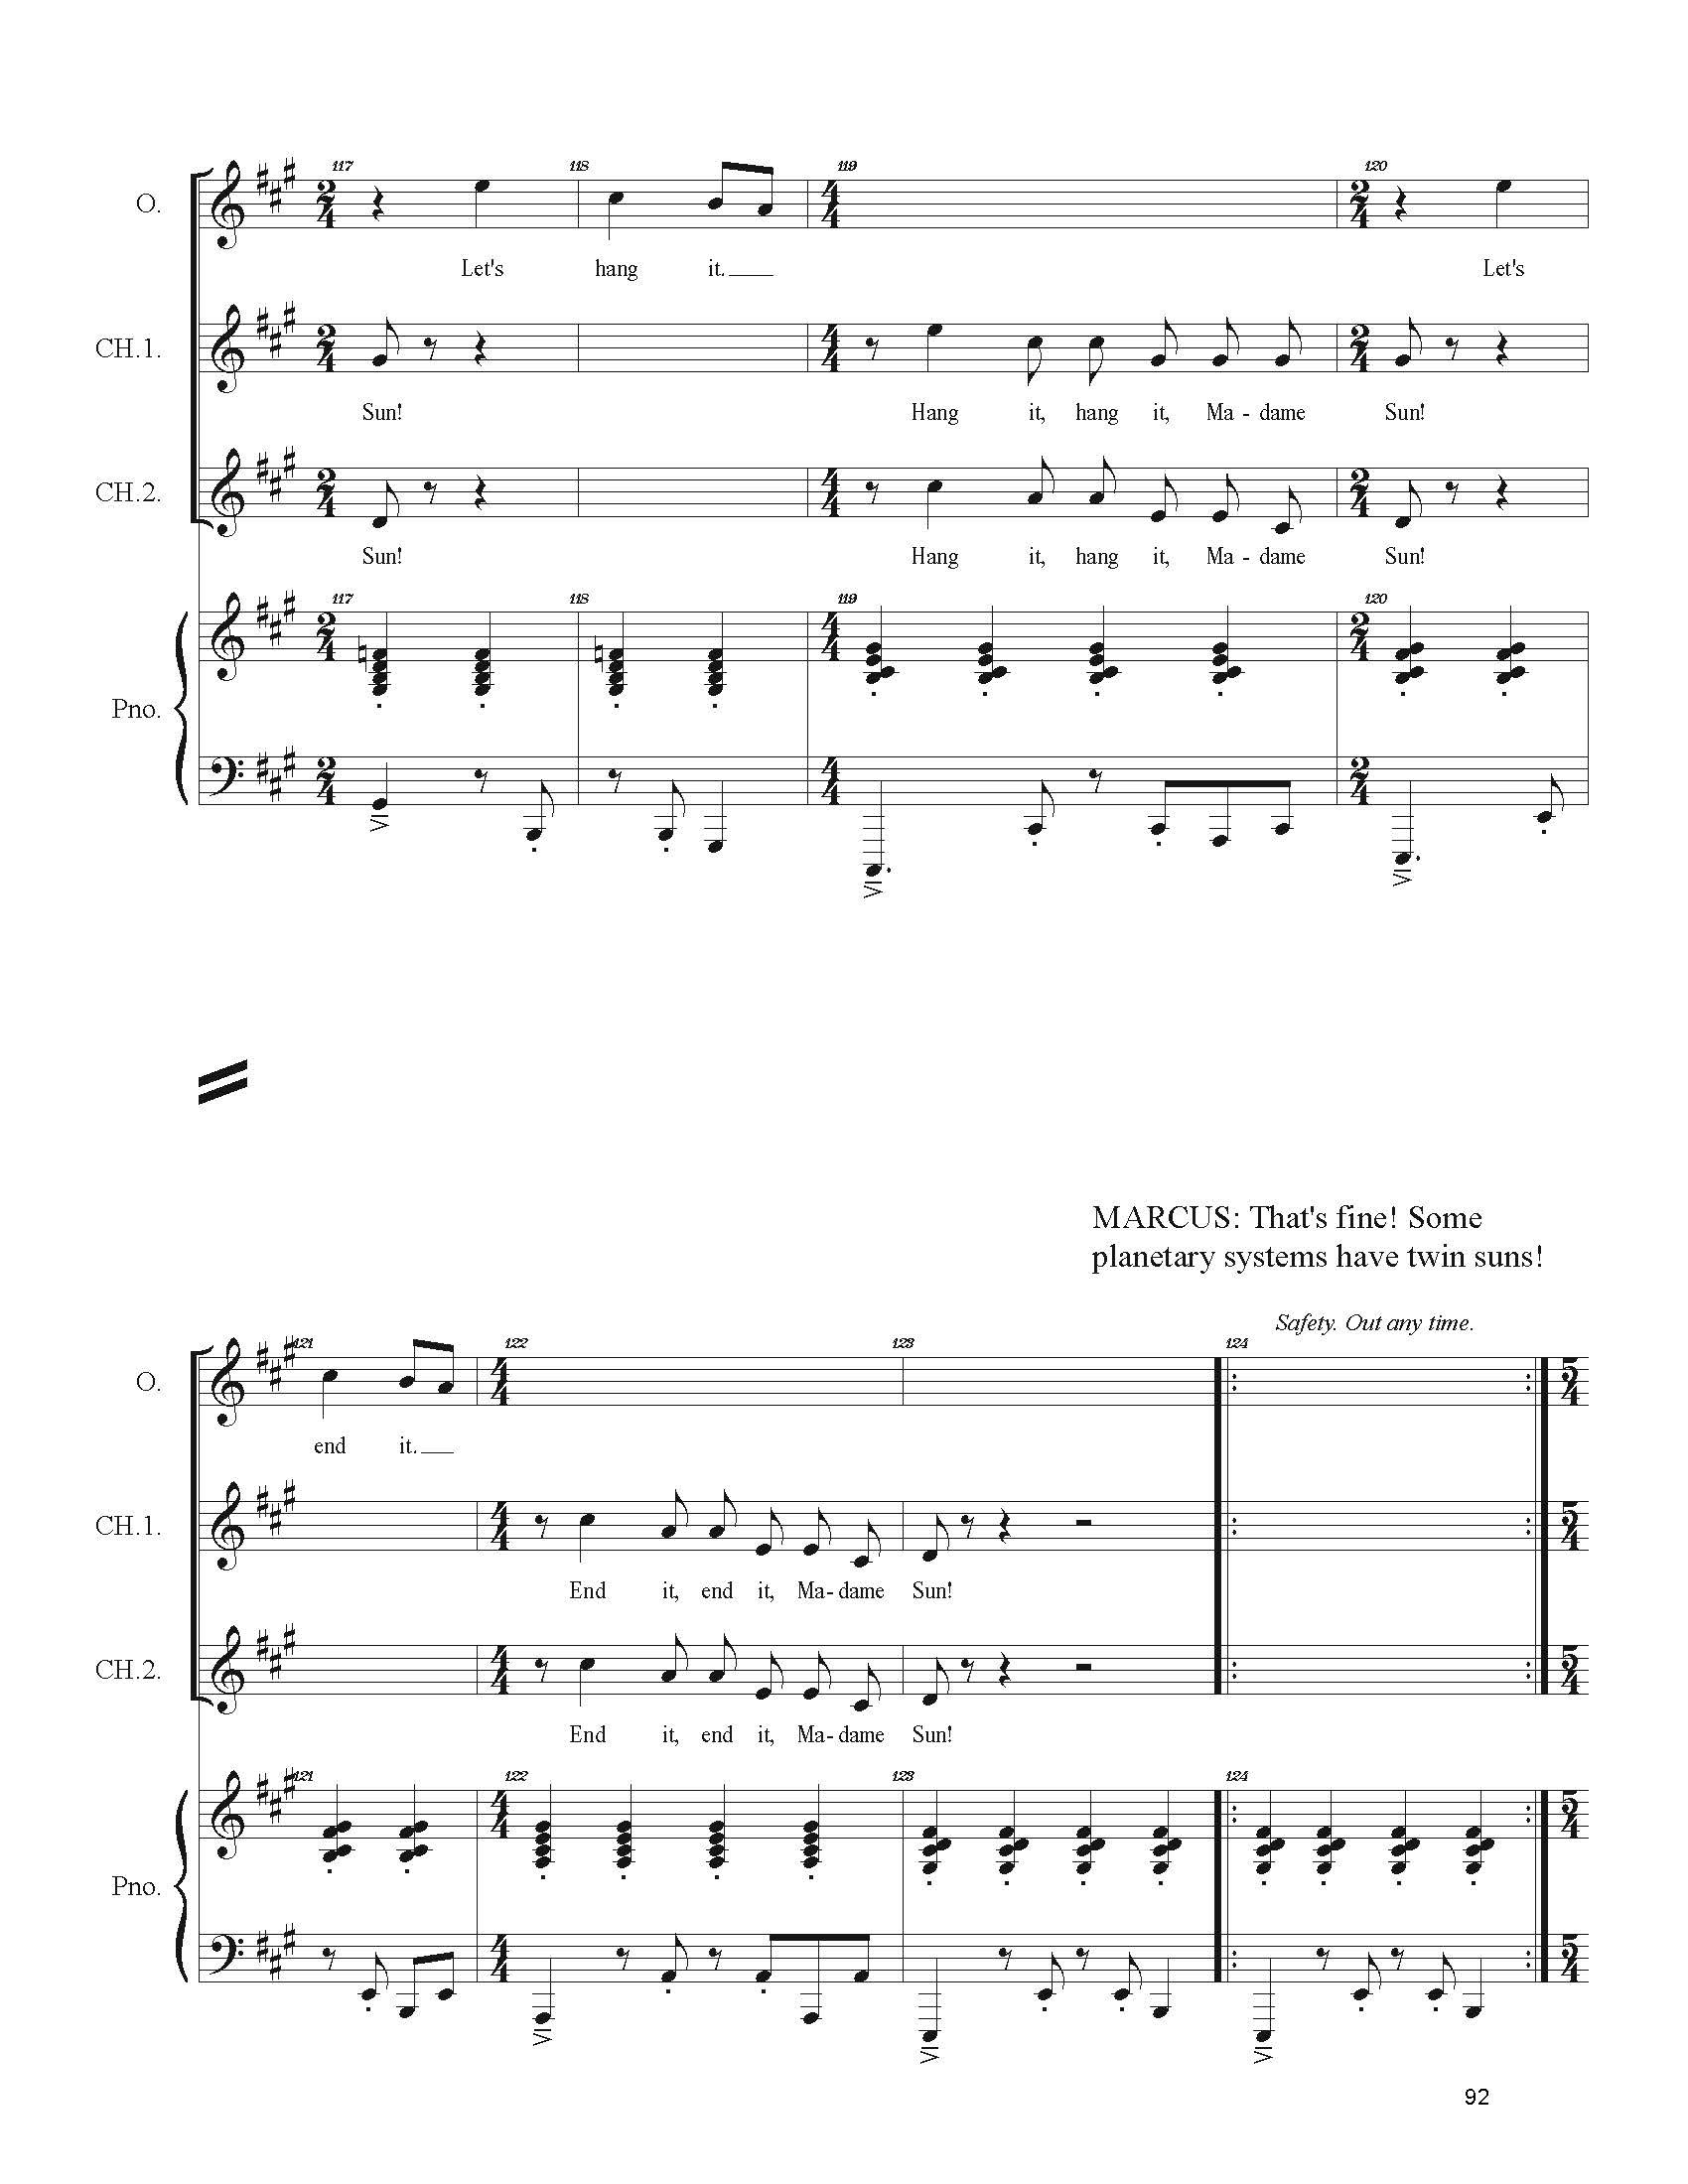 FULL PIANO VOCAL SCORE DRAFT 1 - Score_Page_092.jpg